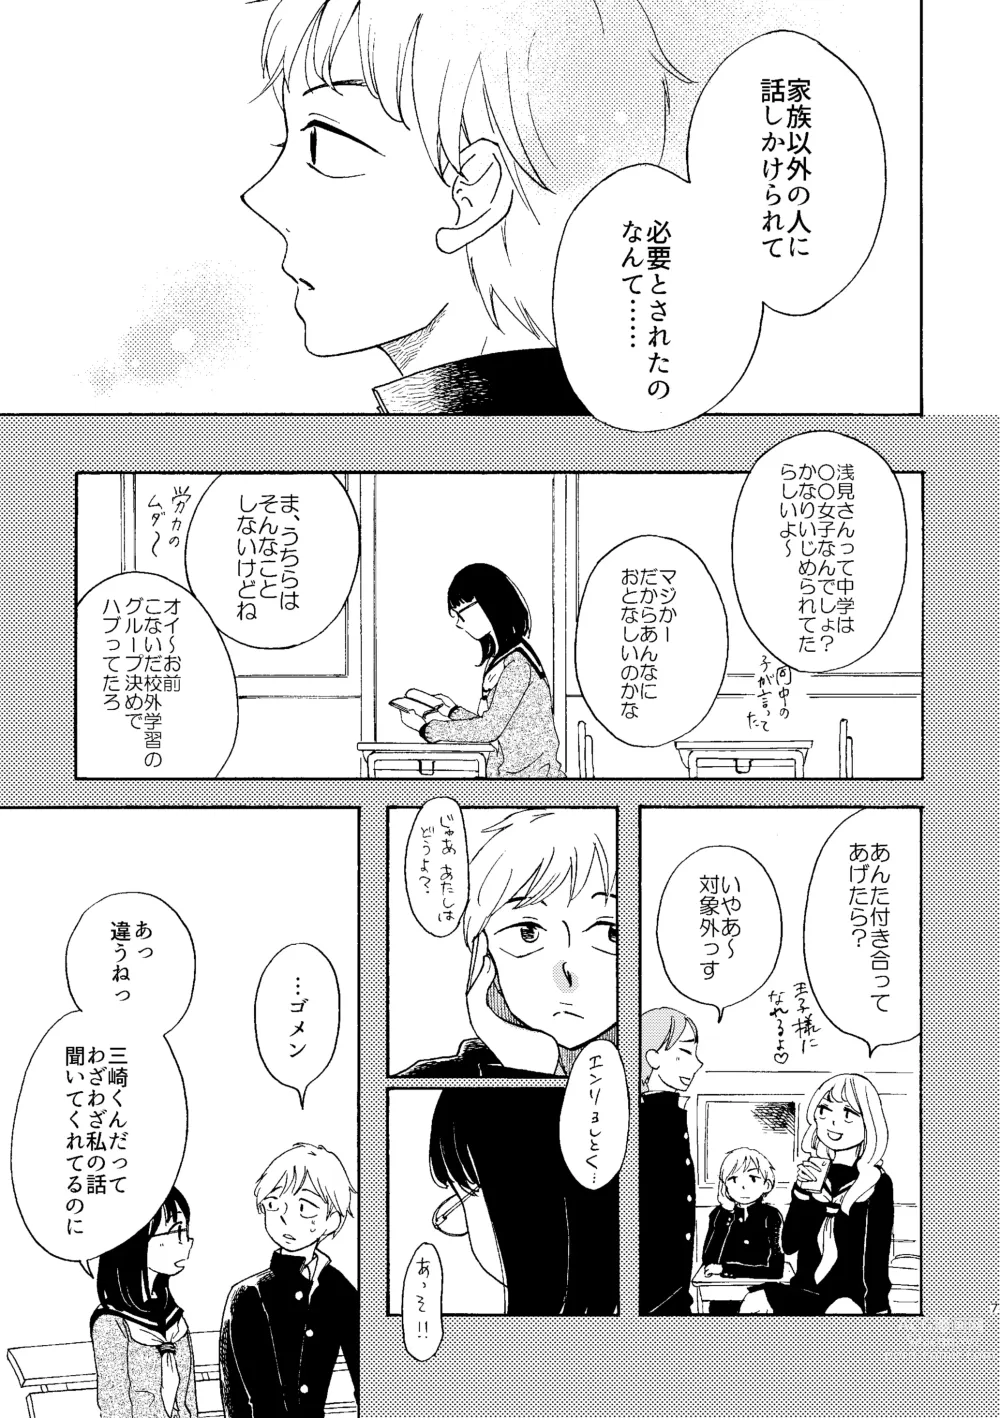 Page 7 of doujinshi Ibitsu na Junjou